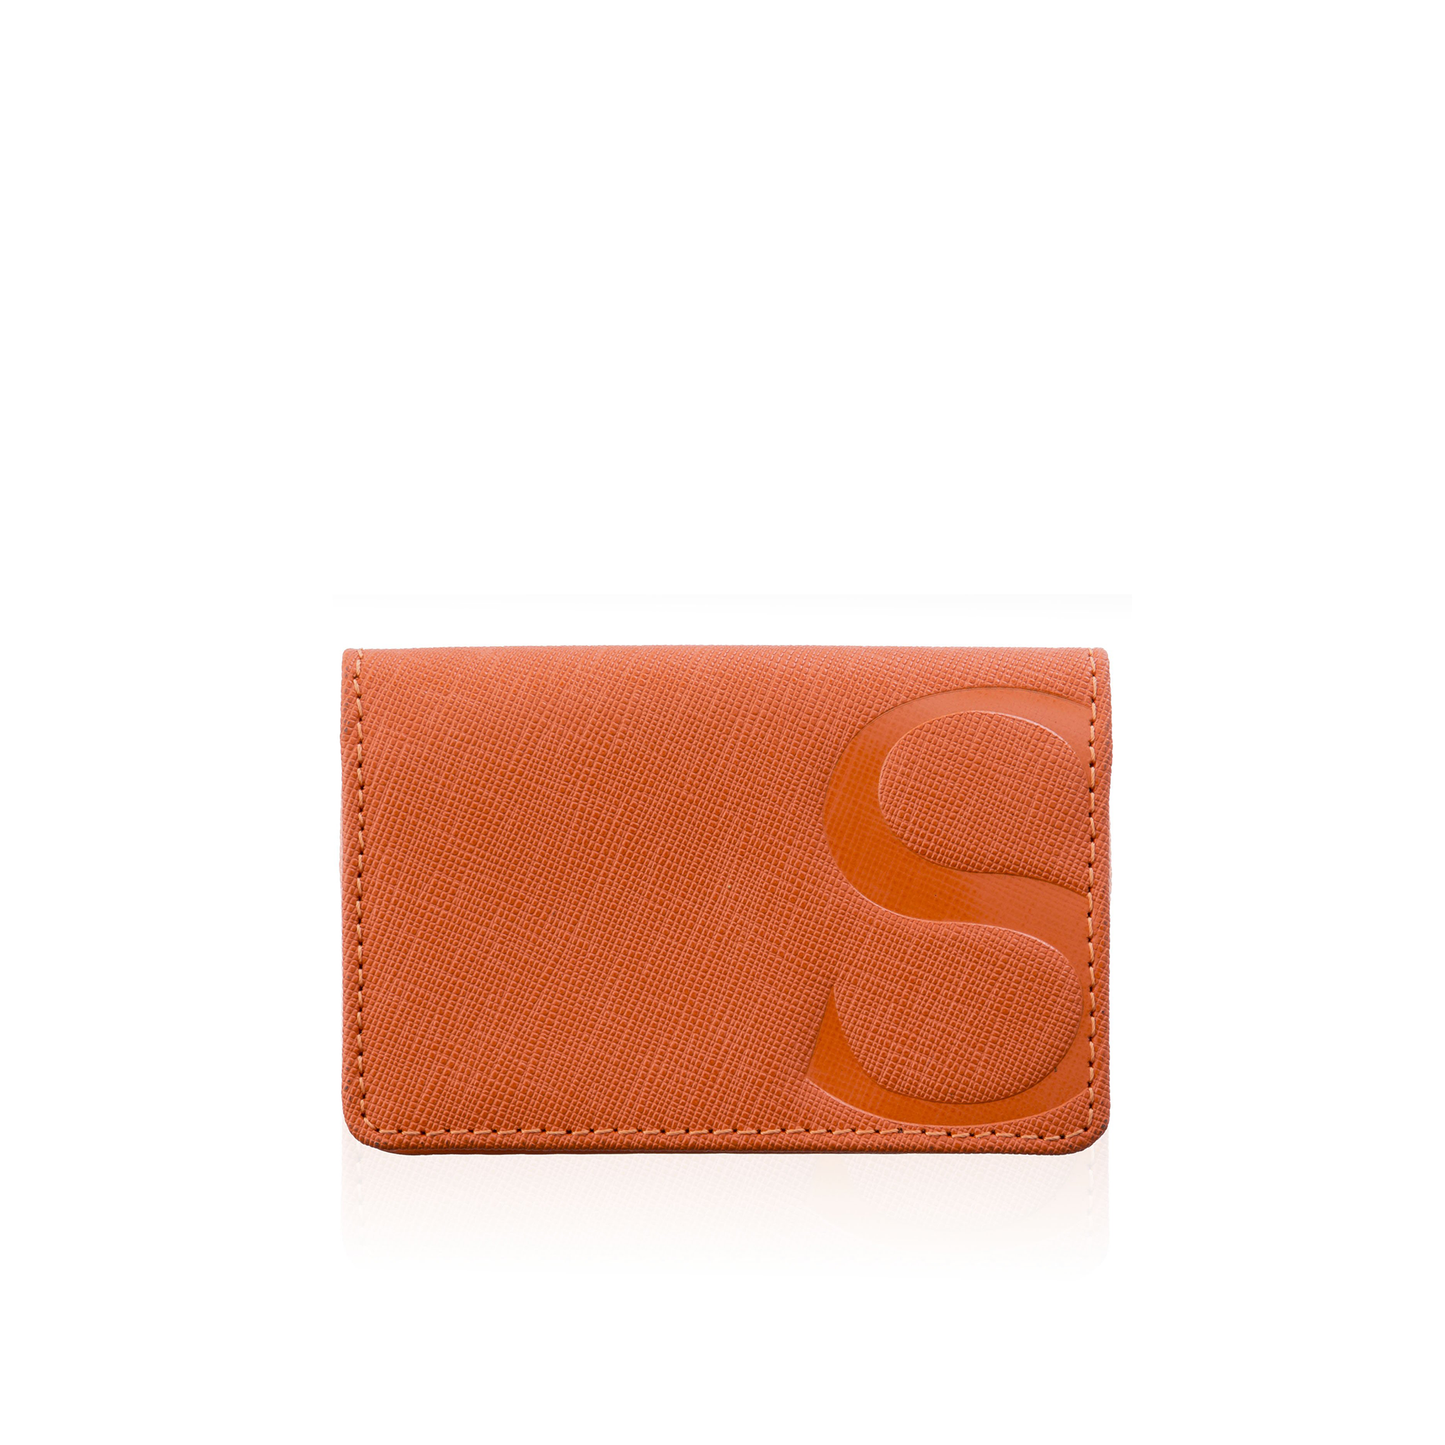 Credit Card Case in Orange Textured Leather